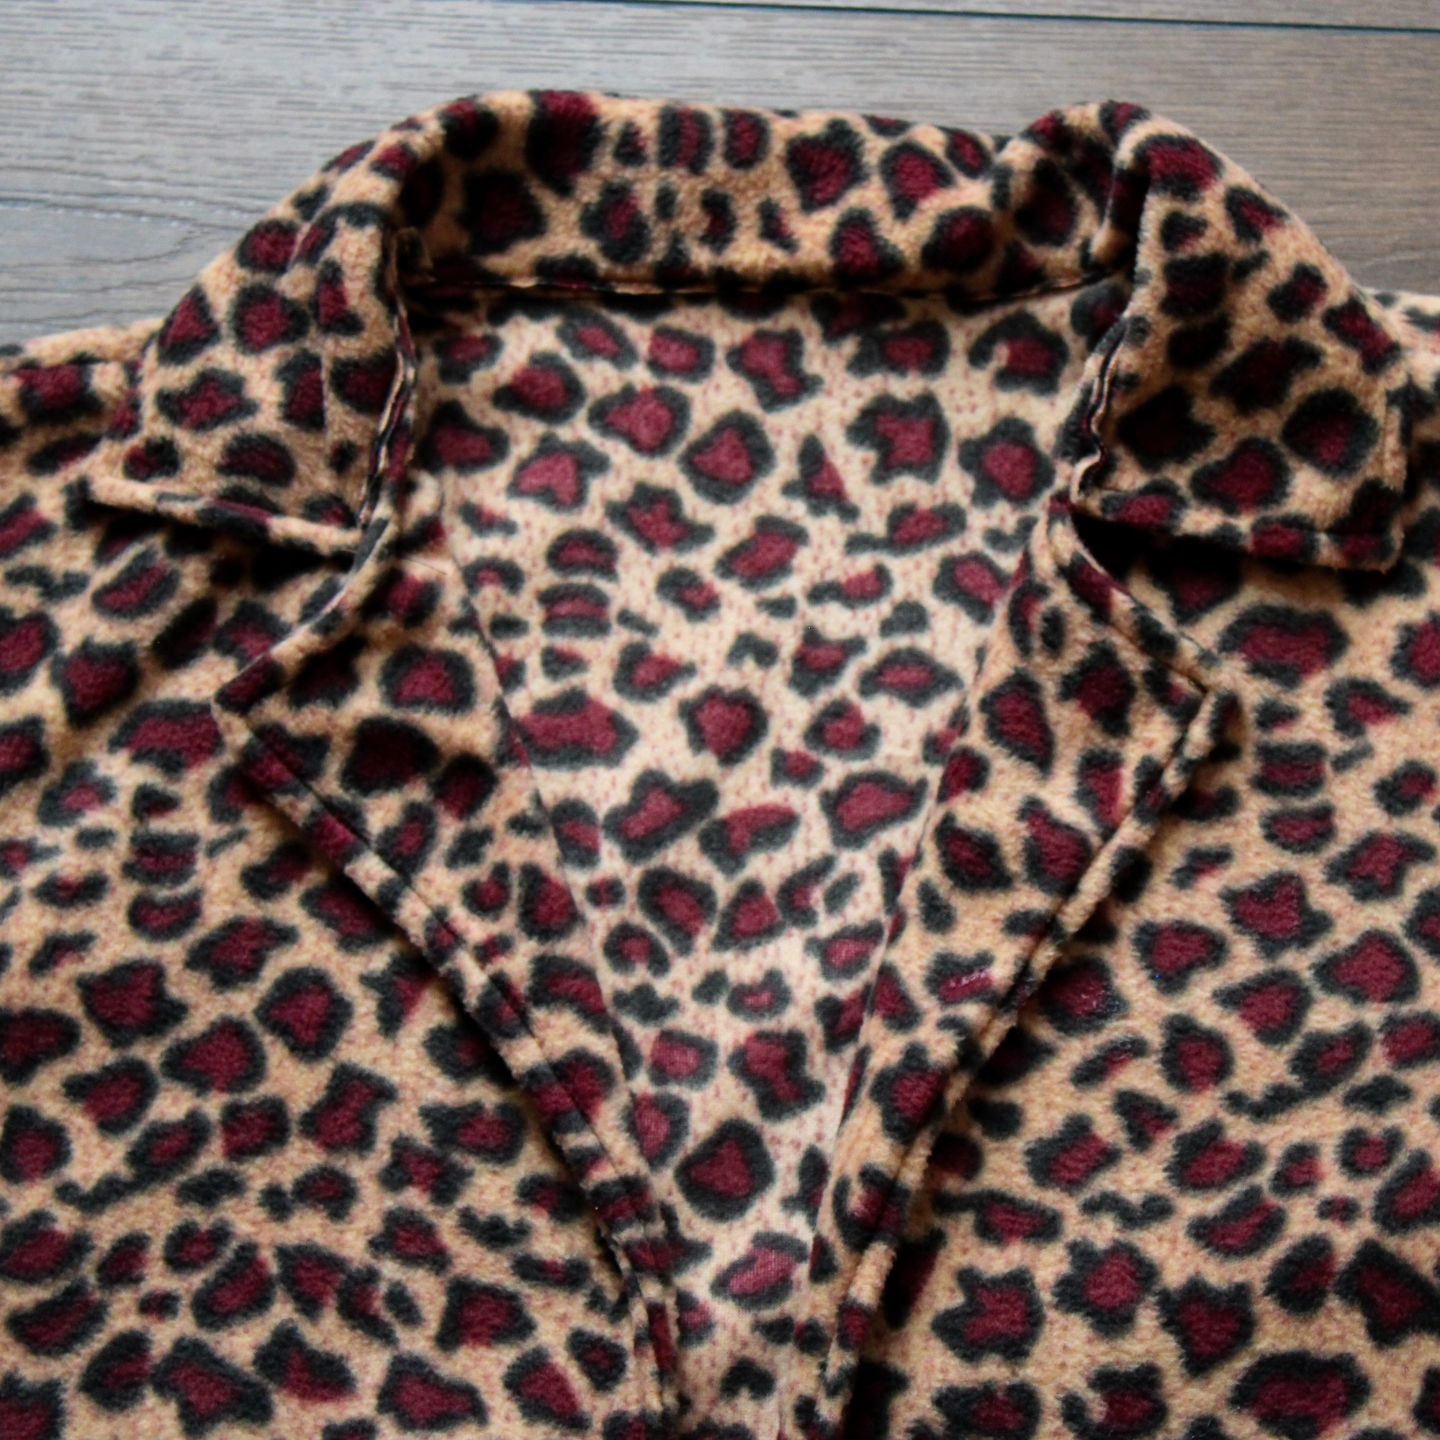 Fleece cheetah print worker shirt drops tomorrow 
.
.
.
.
.
 #fashion #fashiontrend #grwm #fashionreels #textileart #visualart #clothing #ootd #coffee #casualstyle